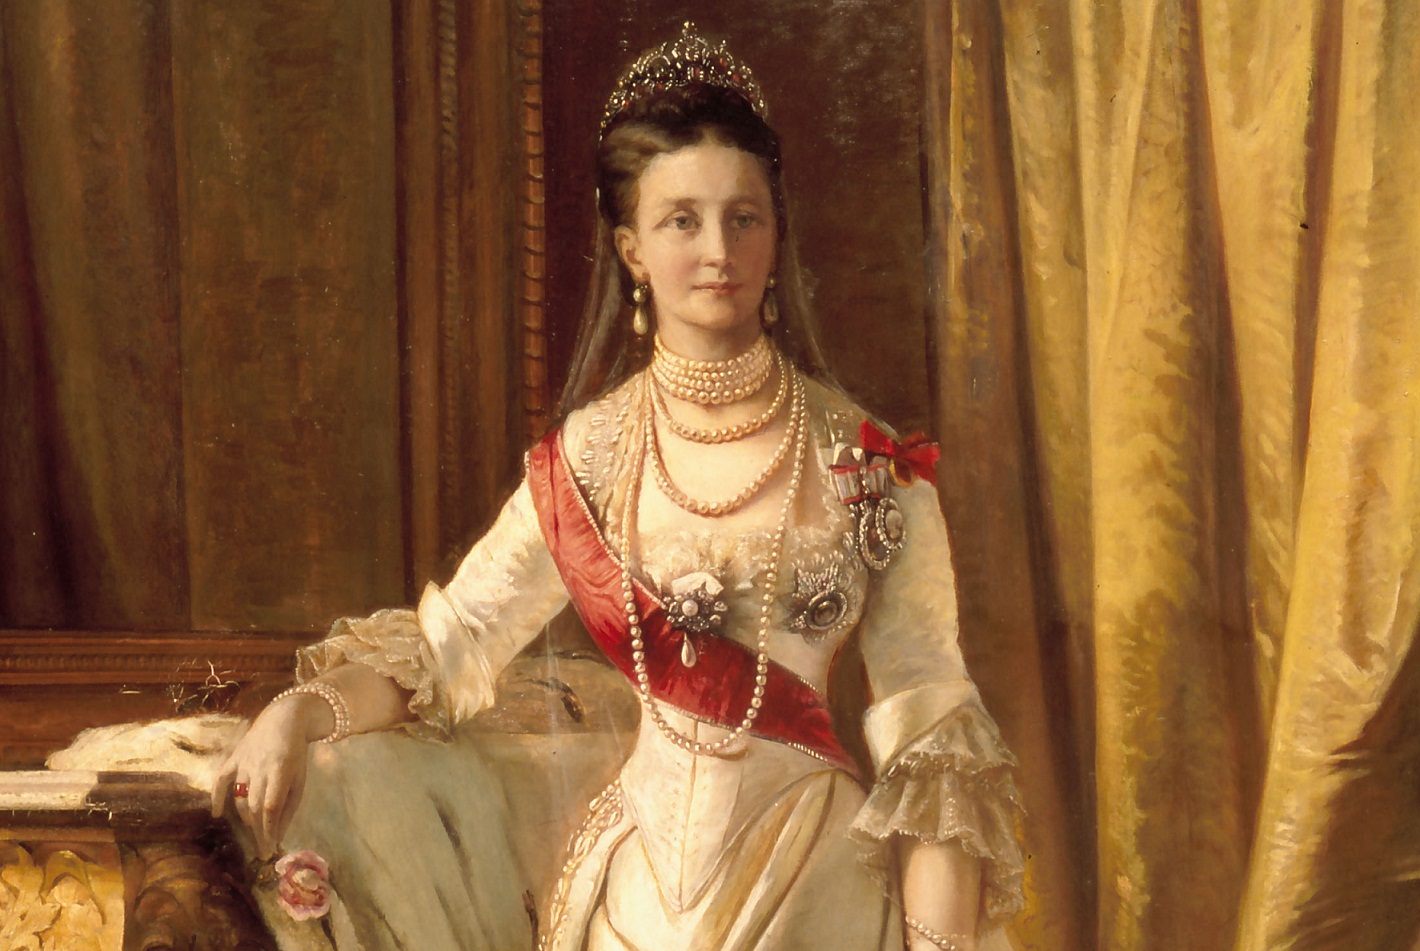 1817: Princess Louise of Hesse-Kassel – the “Grandmother of Europe”